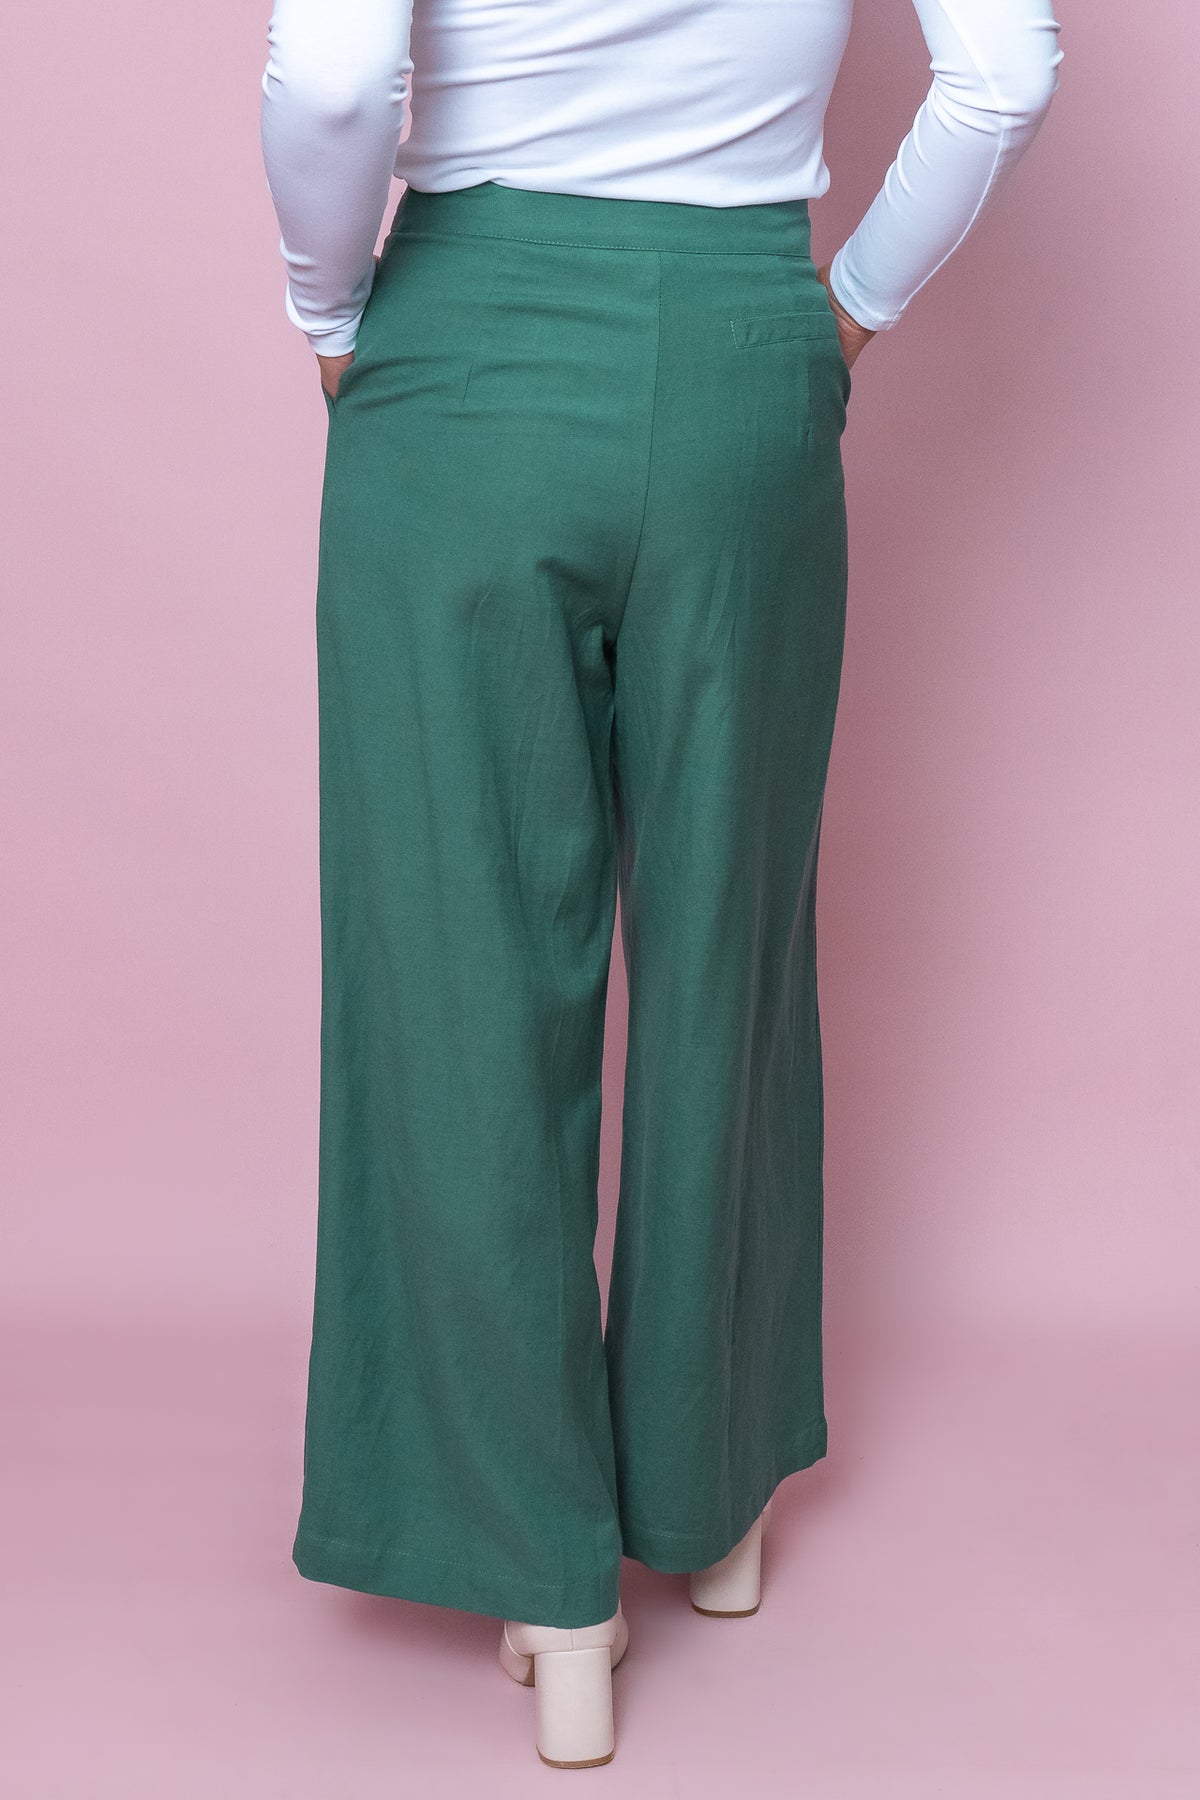 Cora Pants in Emerald